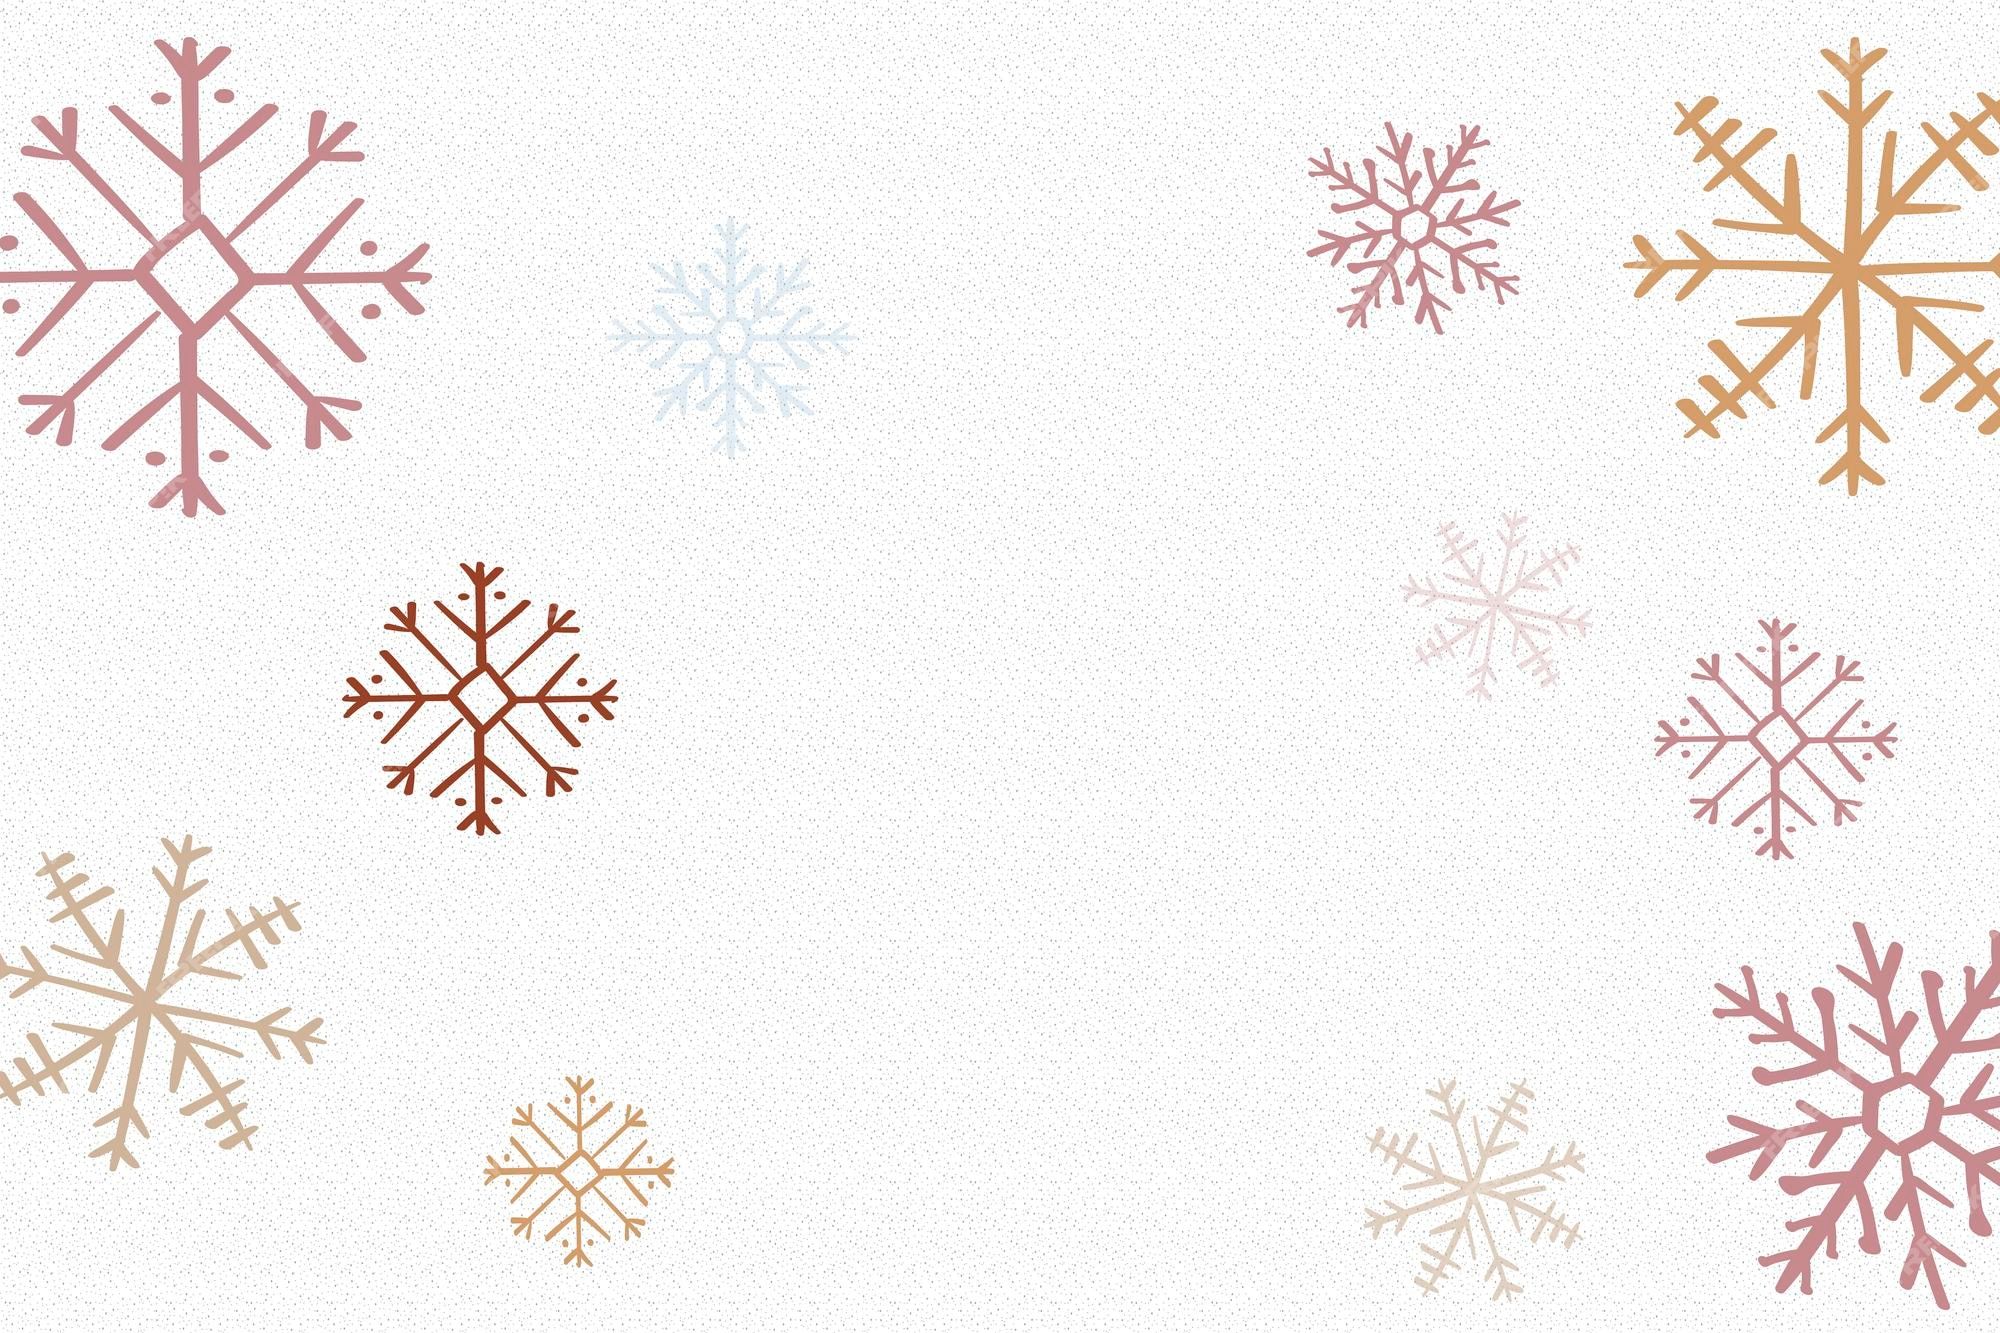  Winter Weihnachten Hintergrundbild 2000x1333. Free Vector. Winter snowflake background, christmas aesthetic doodle in white vector